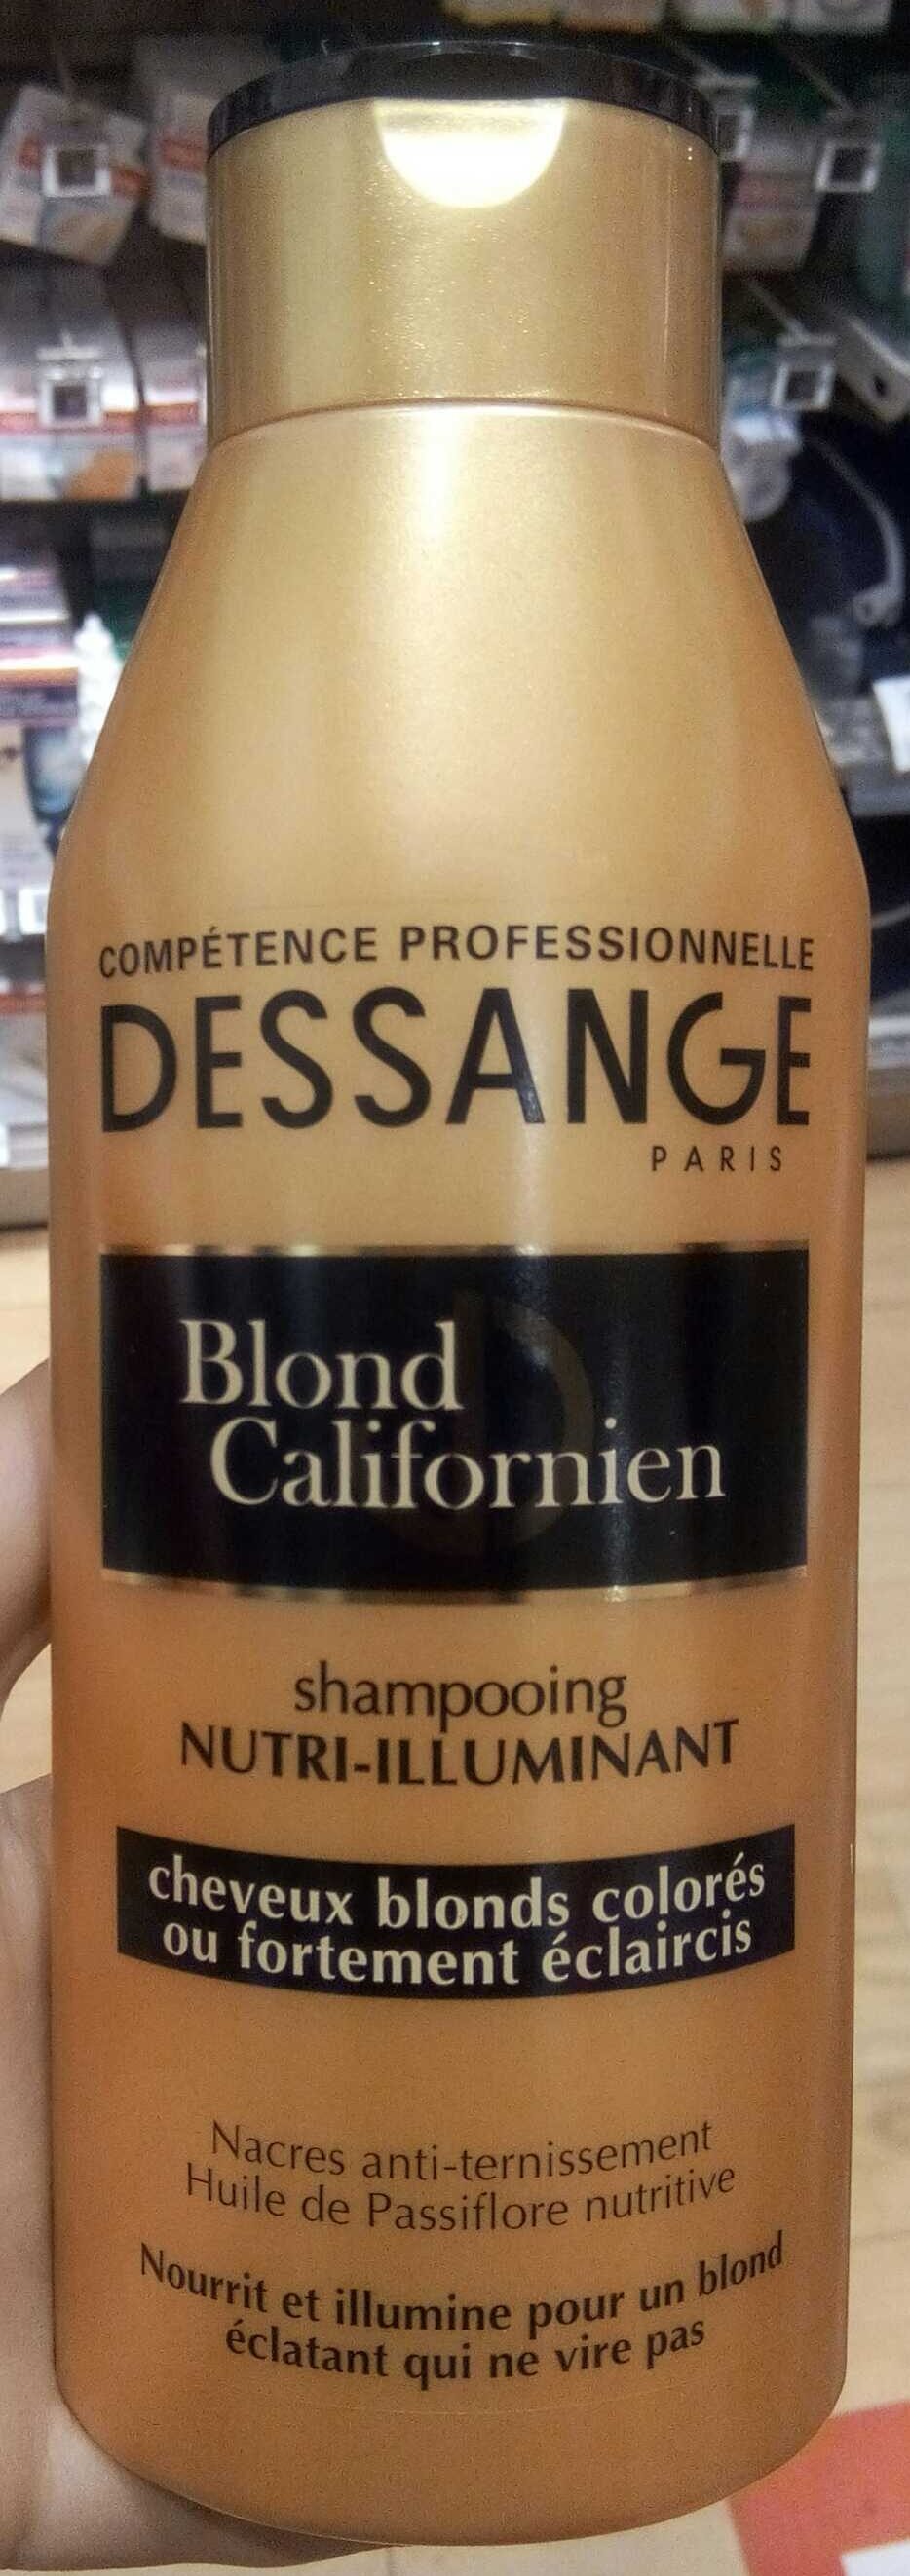 Shampoing Nutri-illuminant Blond Californien - Product - fr